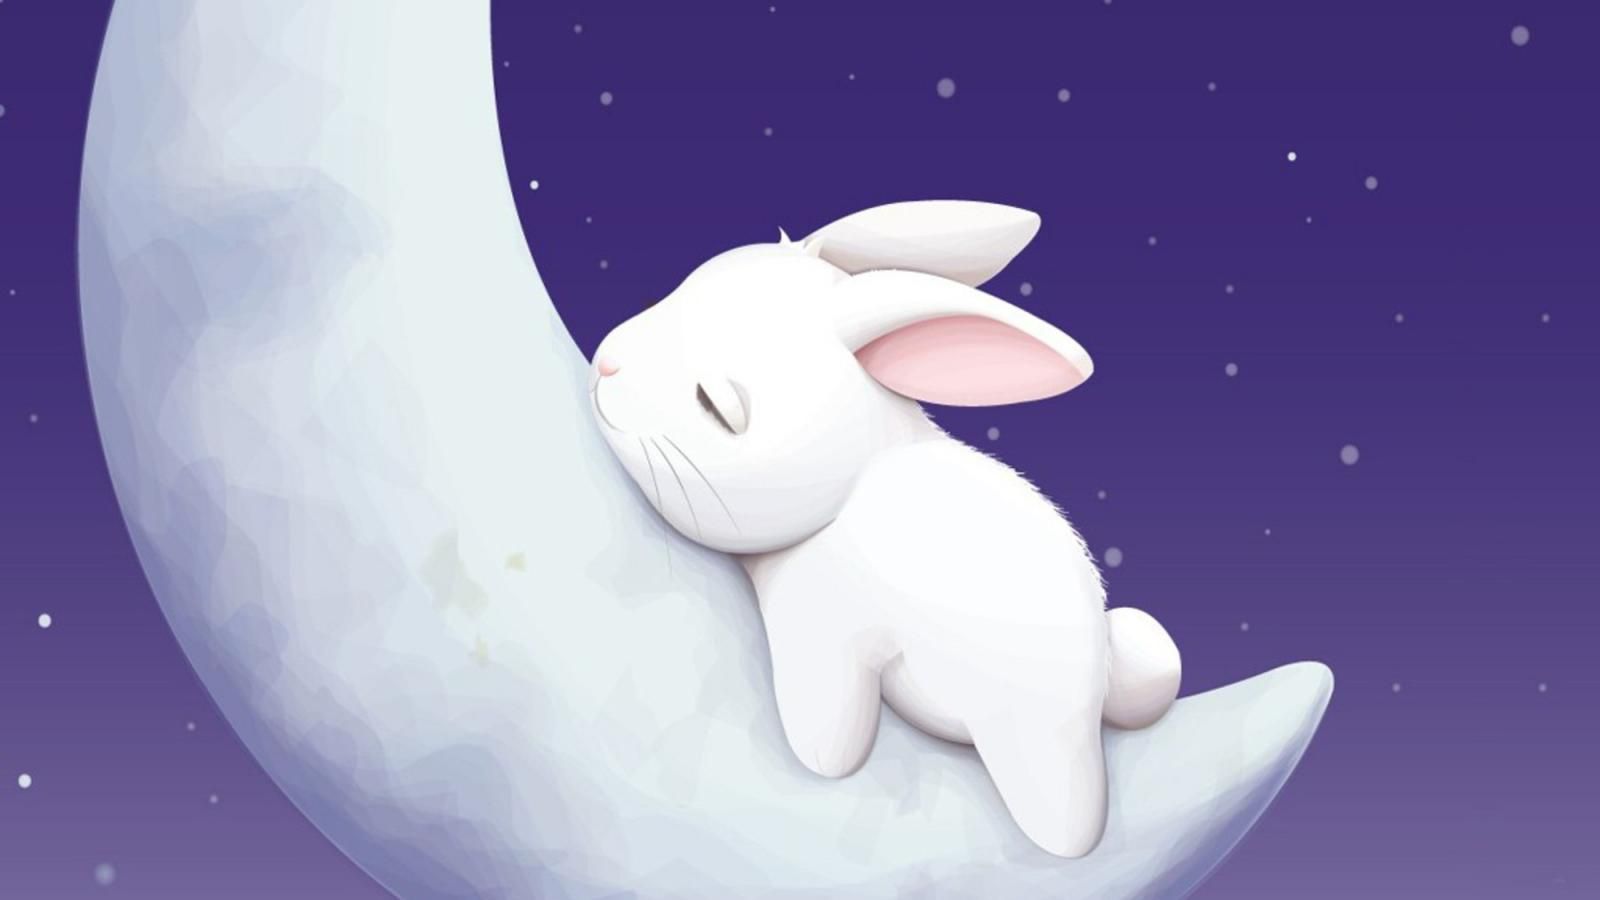 Cute cartoon rabbit wallpaper. Bunny wallpaper, Cute bunny cartoon wallpaper, Rabbit wallpaper